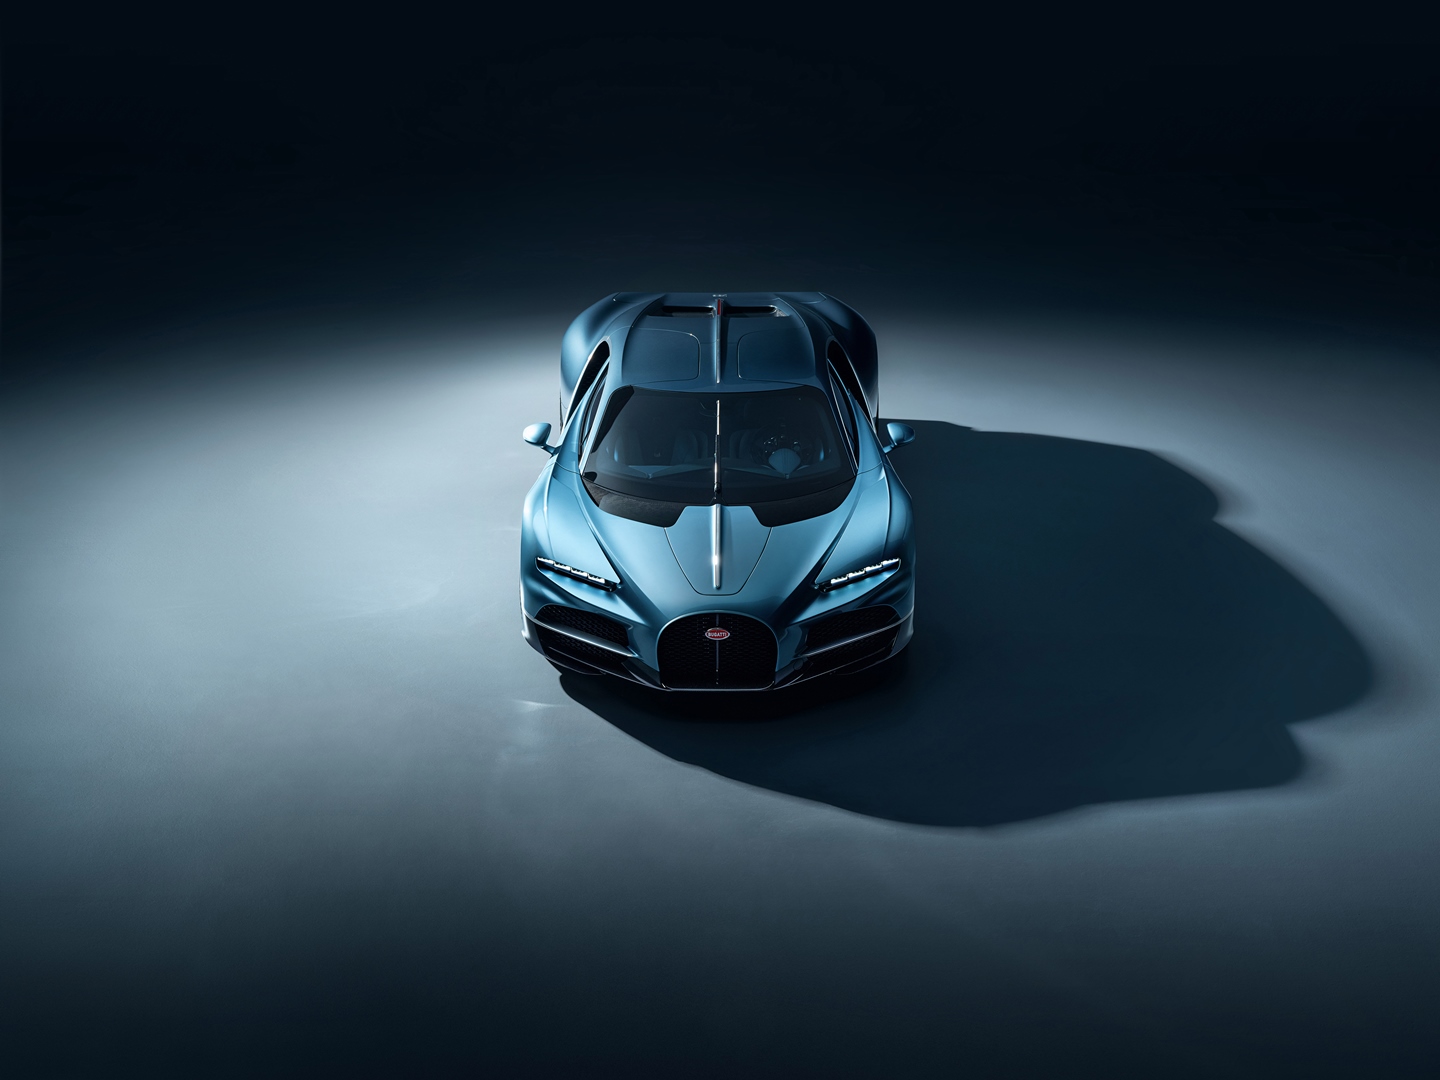 bugatti-world-premiere-presskit-images-30.jpg